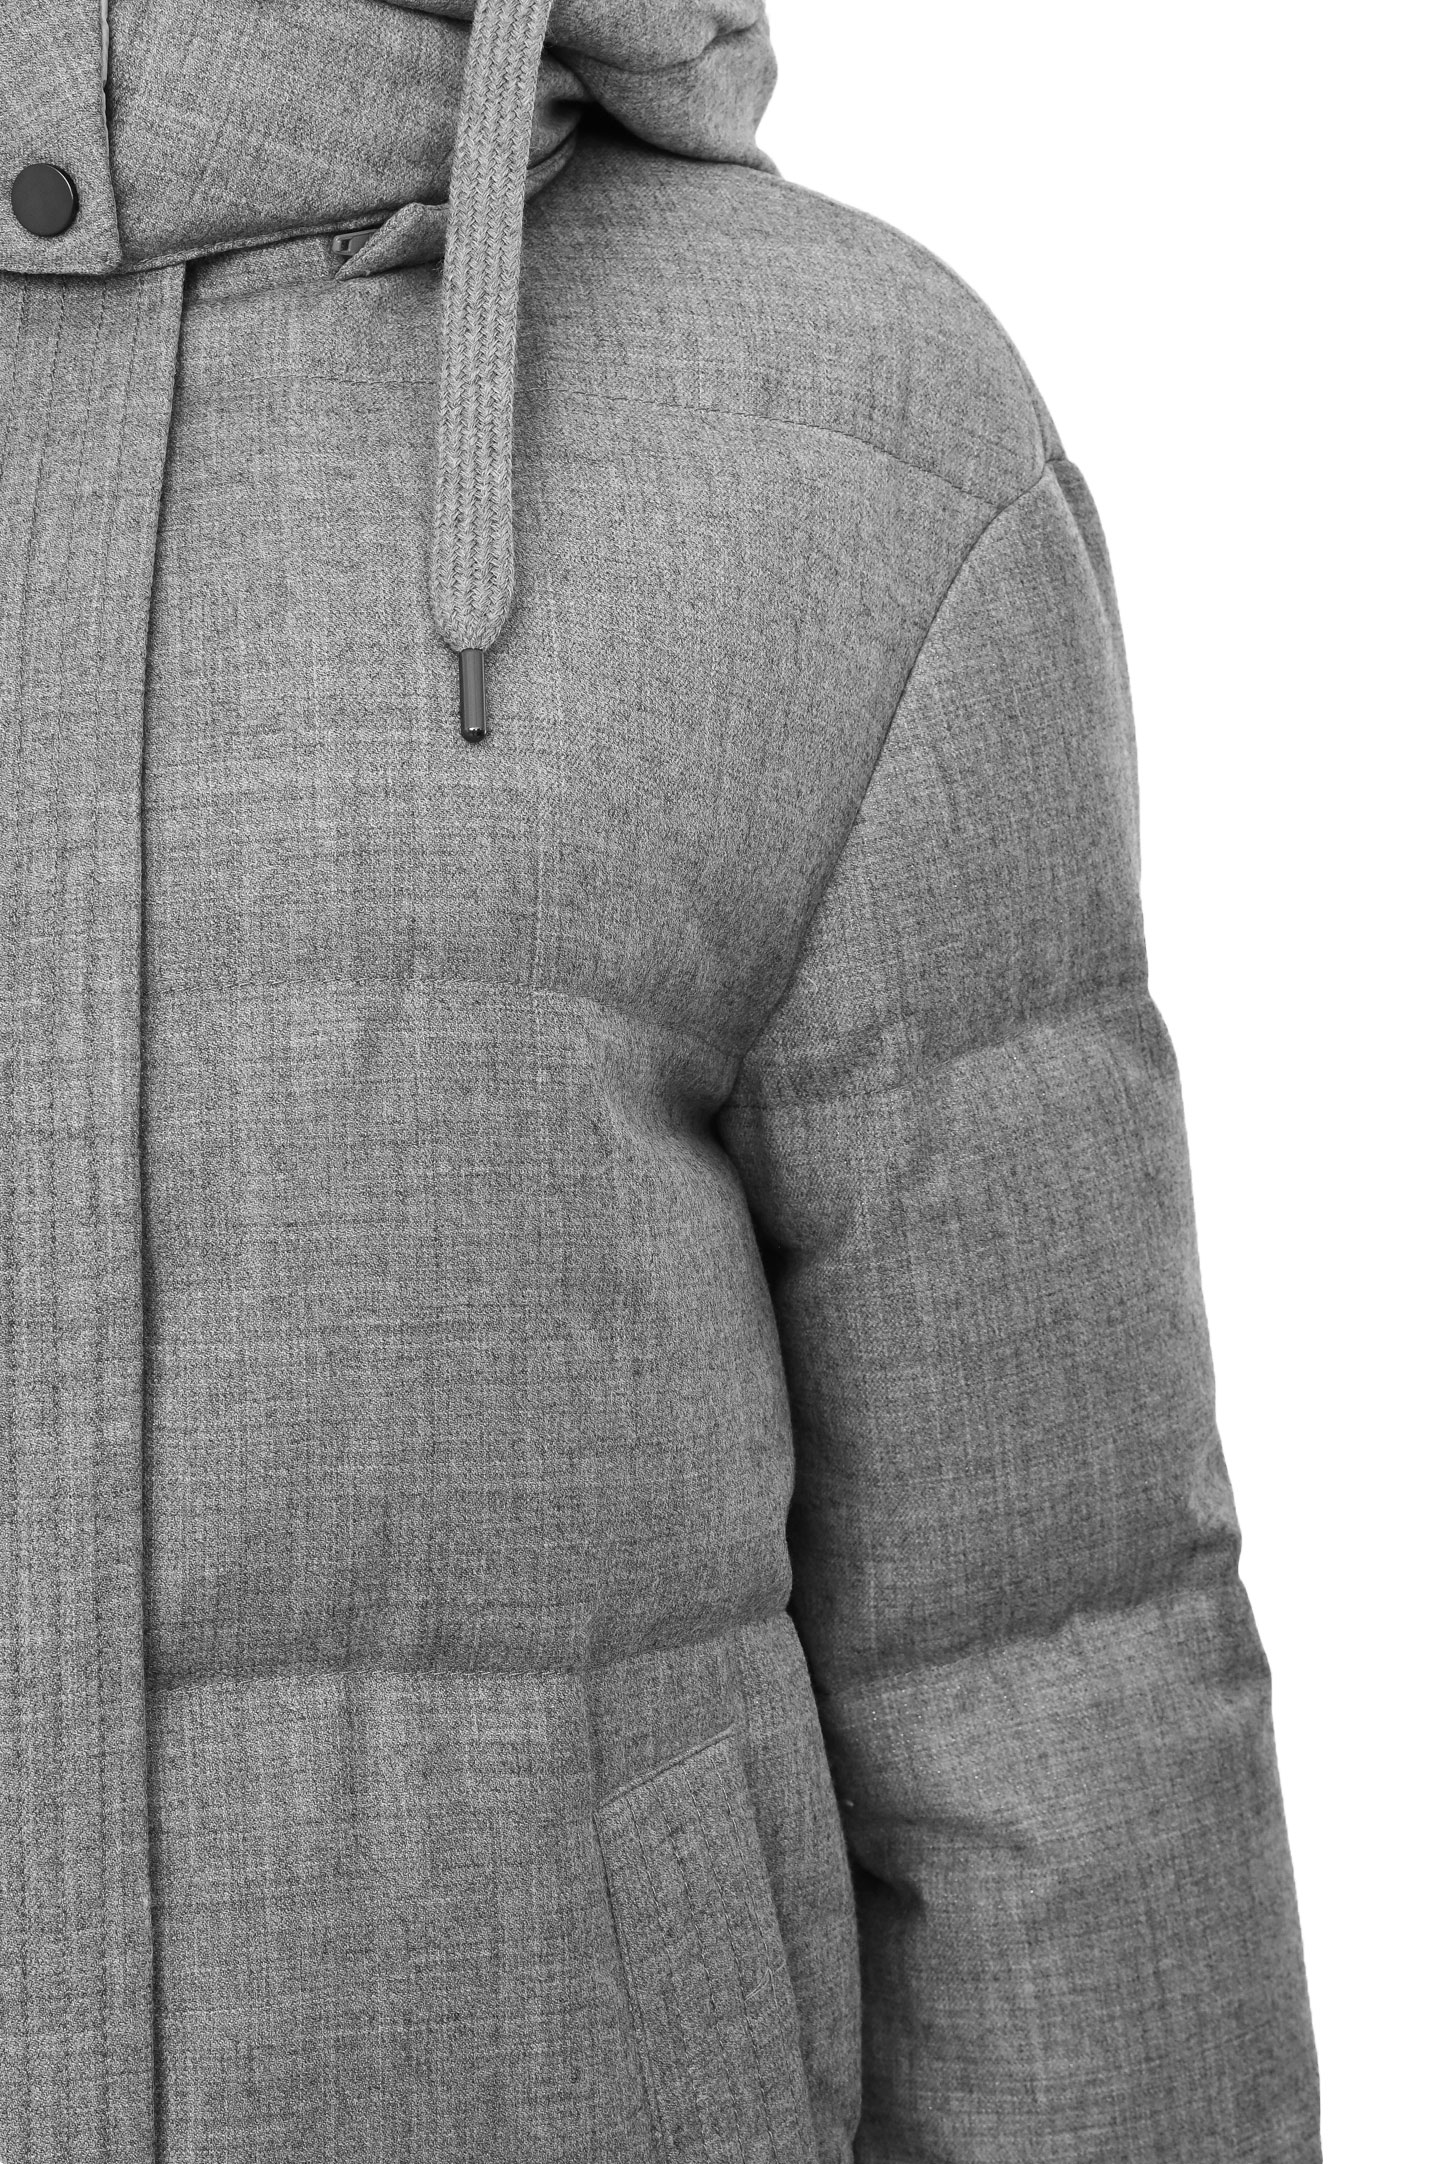 Куртка BRUNELLO  CUCINELLI MT5979587, цвет: Серый, Женский